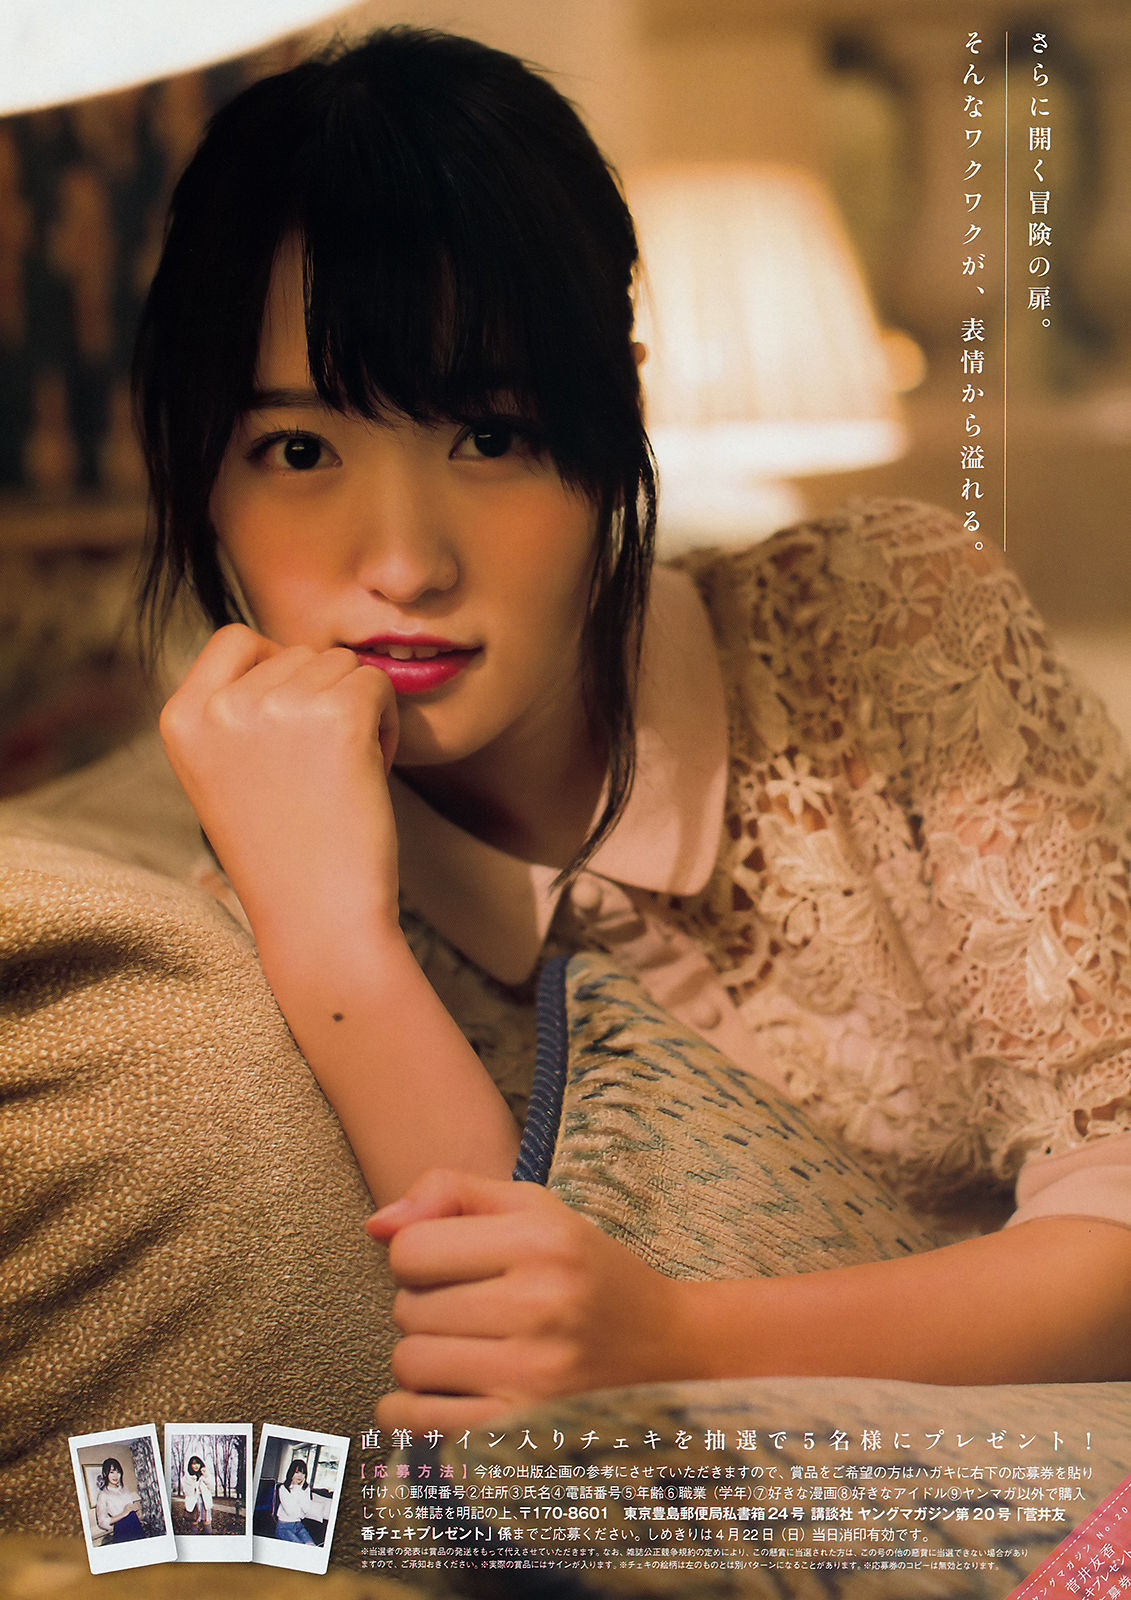 Young magazine. Юка Сугаи. Kana Tokue av debut. Yuiko певица.